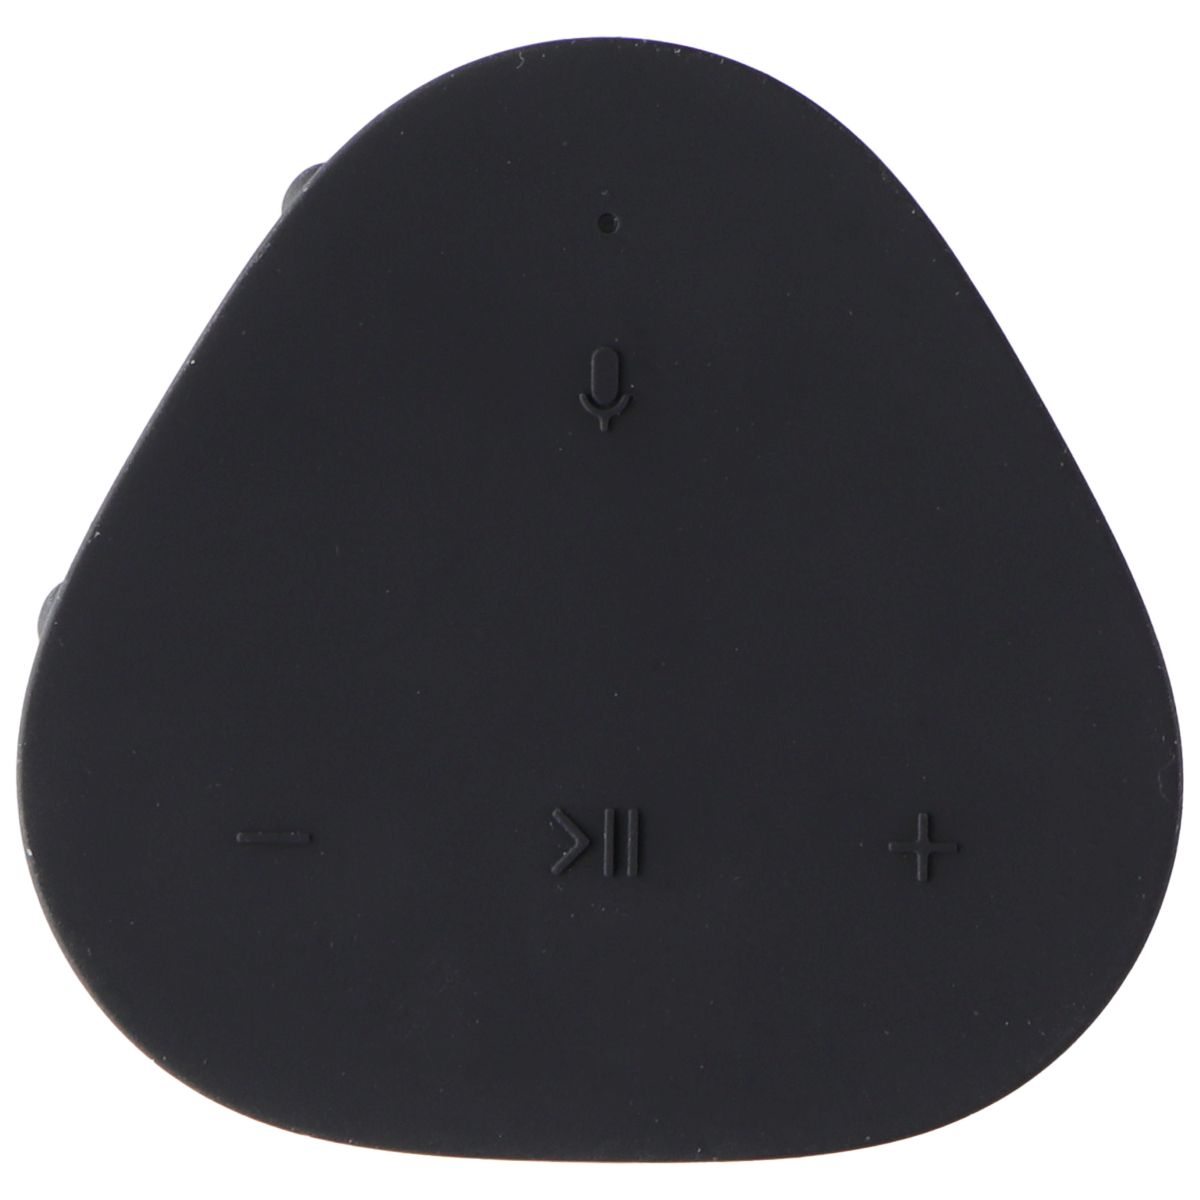 Sonos Roam Wireless Portable Waterproof Bluetooth Speaker - Black (SPEAKER ONLY) Cell Phone - Audio Docks & Speakers SONOS    - Simple Cell Bulk Wholesale Pricing - USA Seller